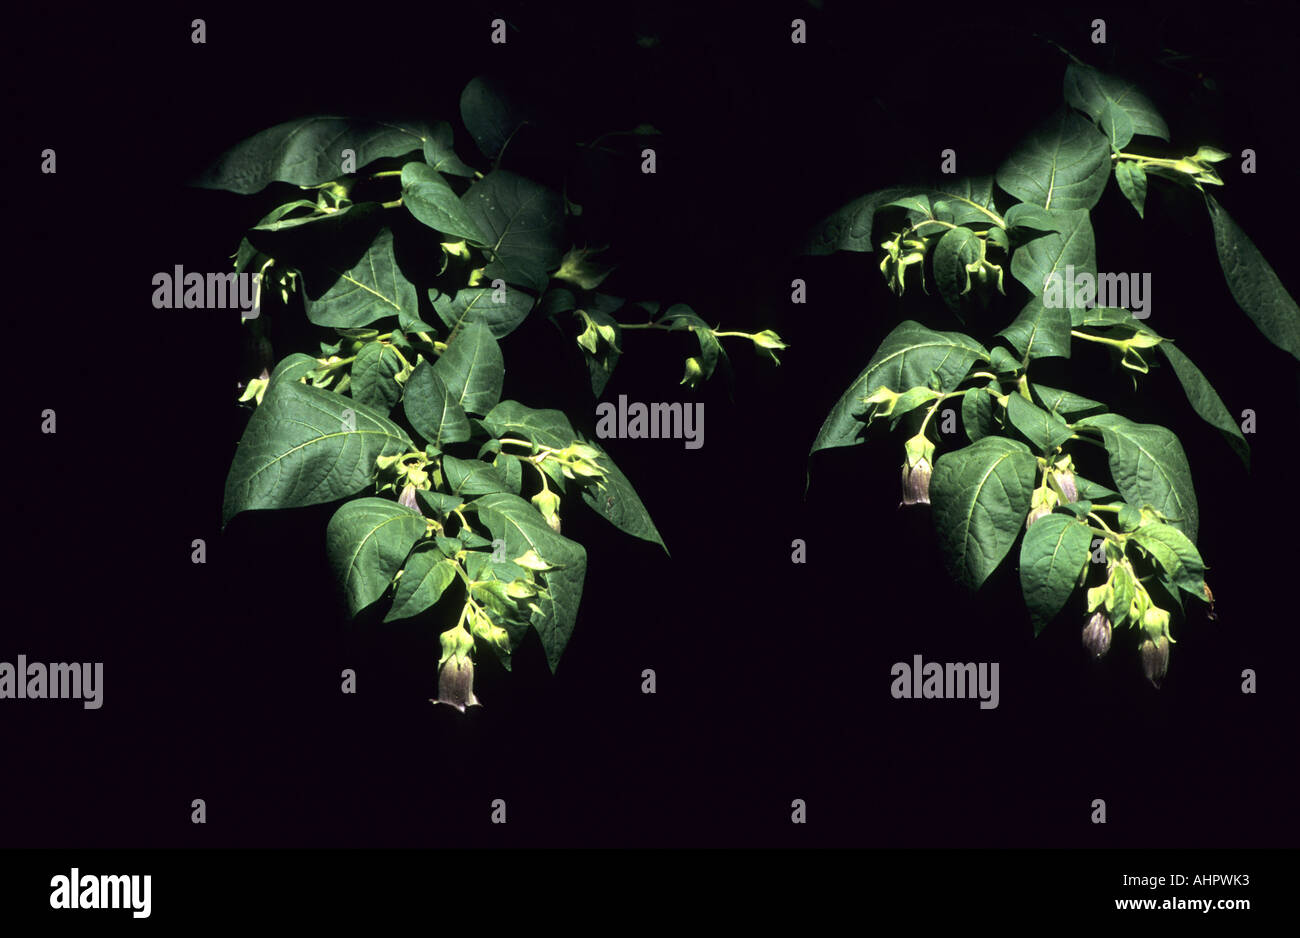 Deadly Nightshade, Atropa belladonna, plant in flower Stock Photo